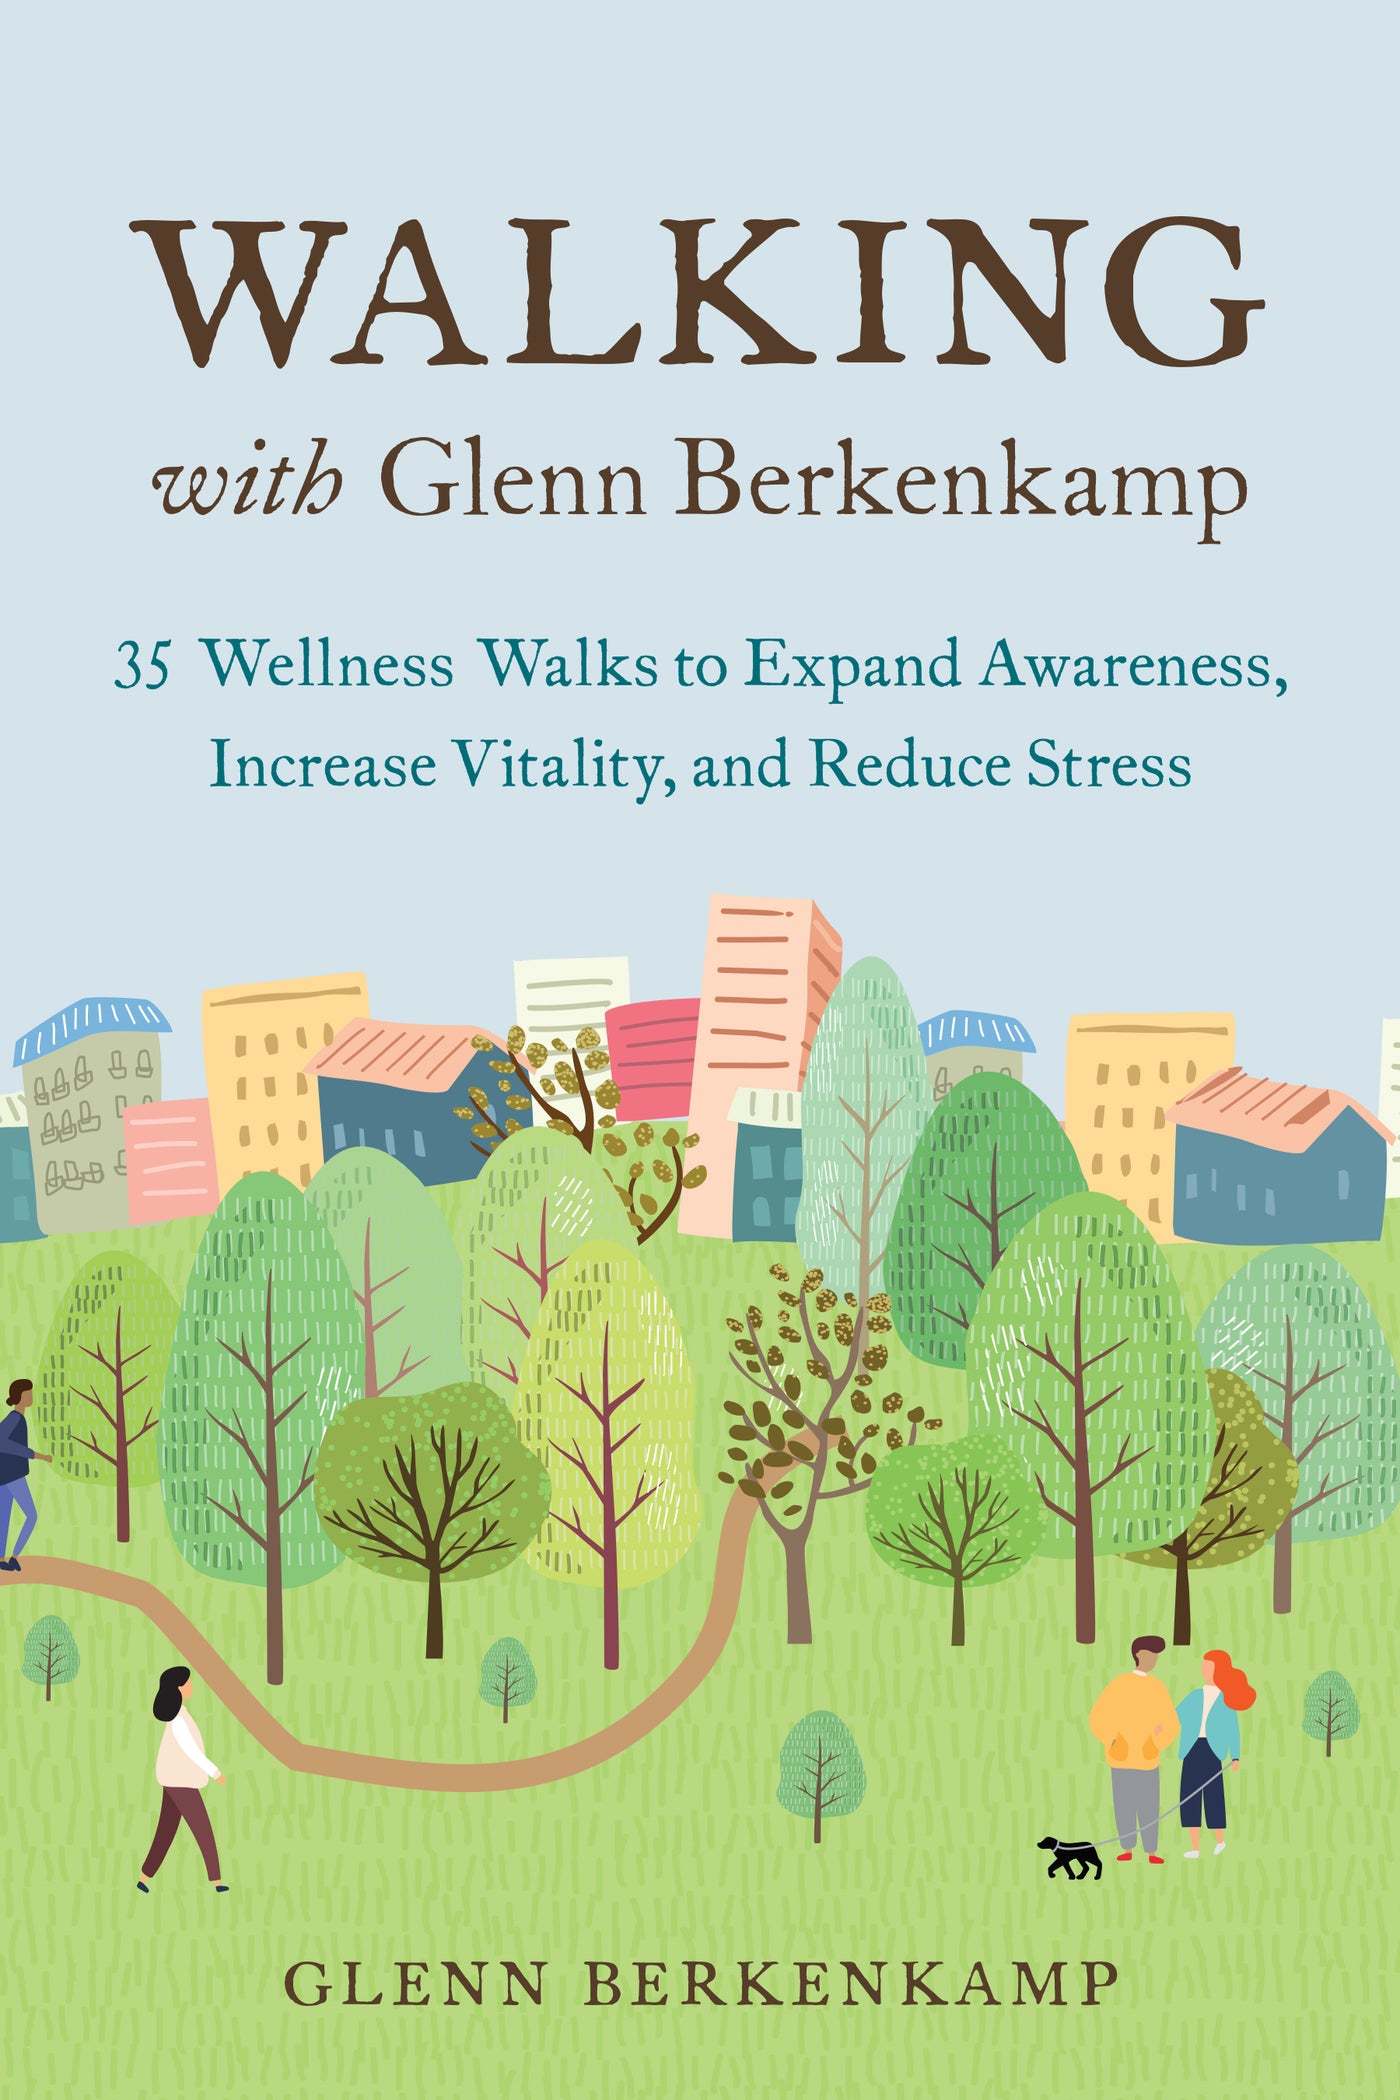 Walking with Glenn Berkenkamp